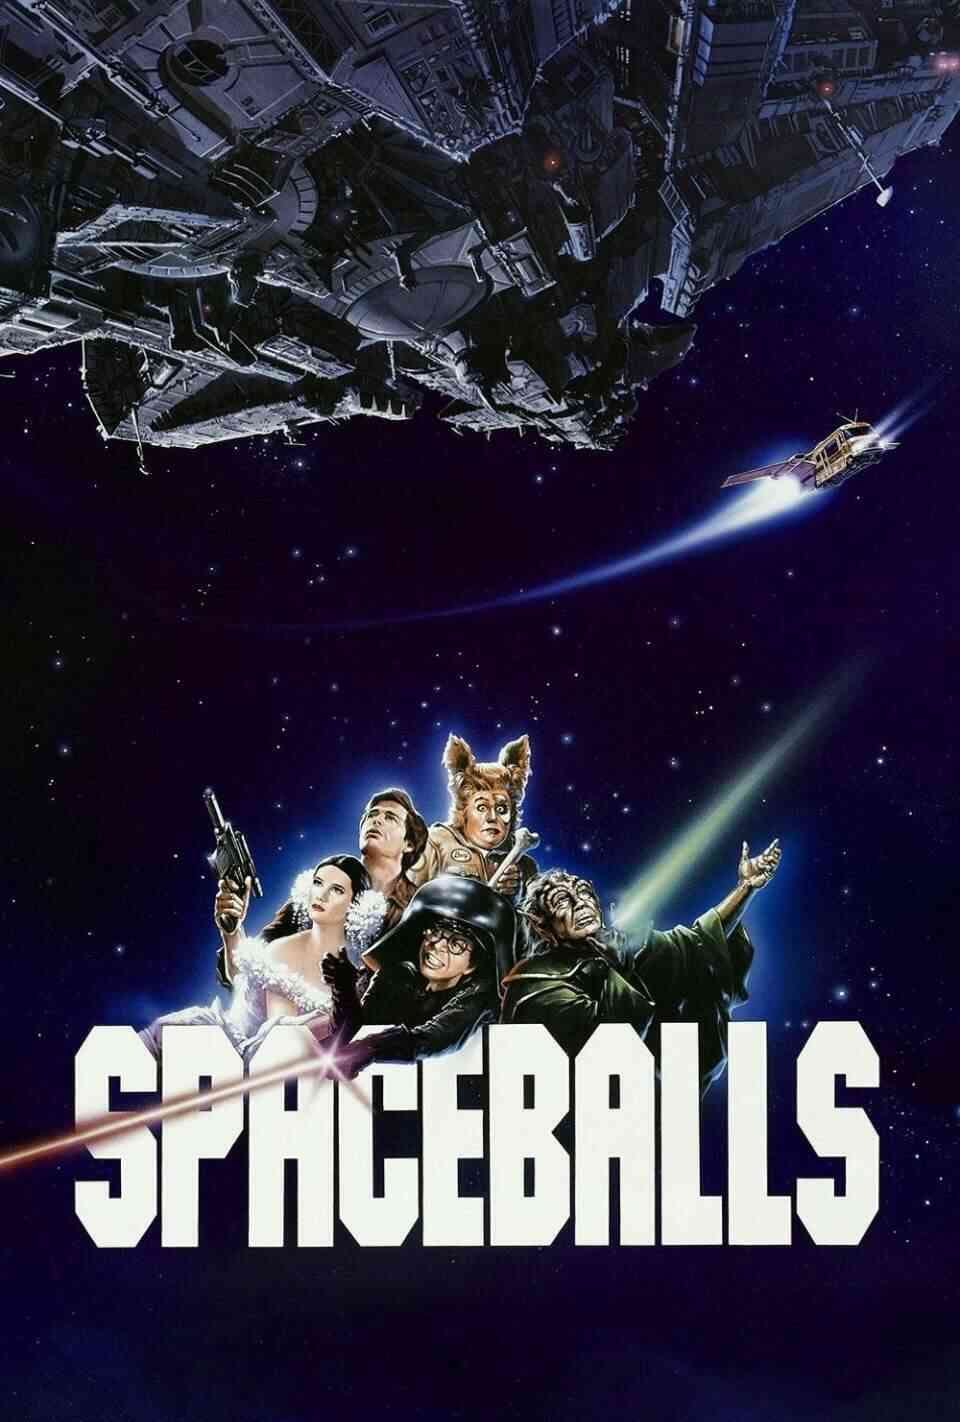 Read Spaceballs screenplay (poster)